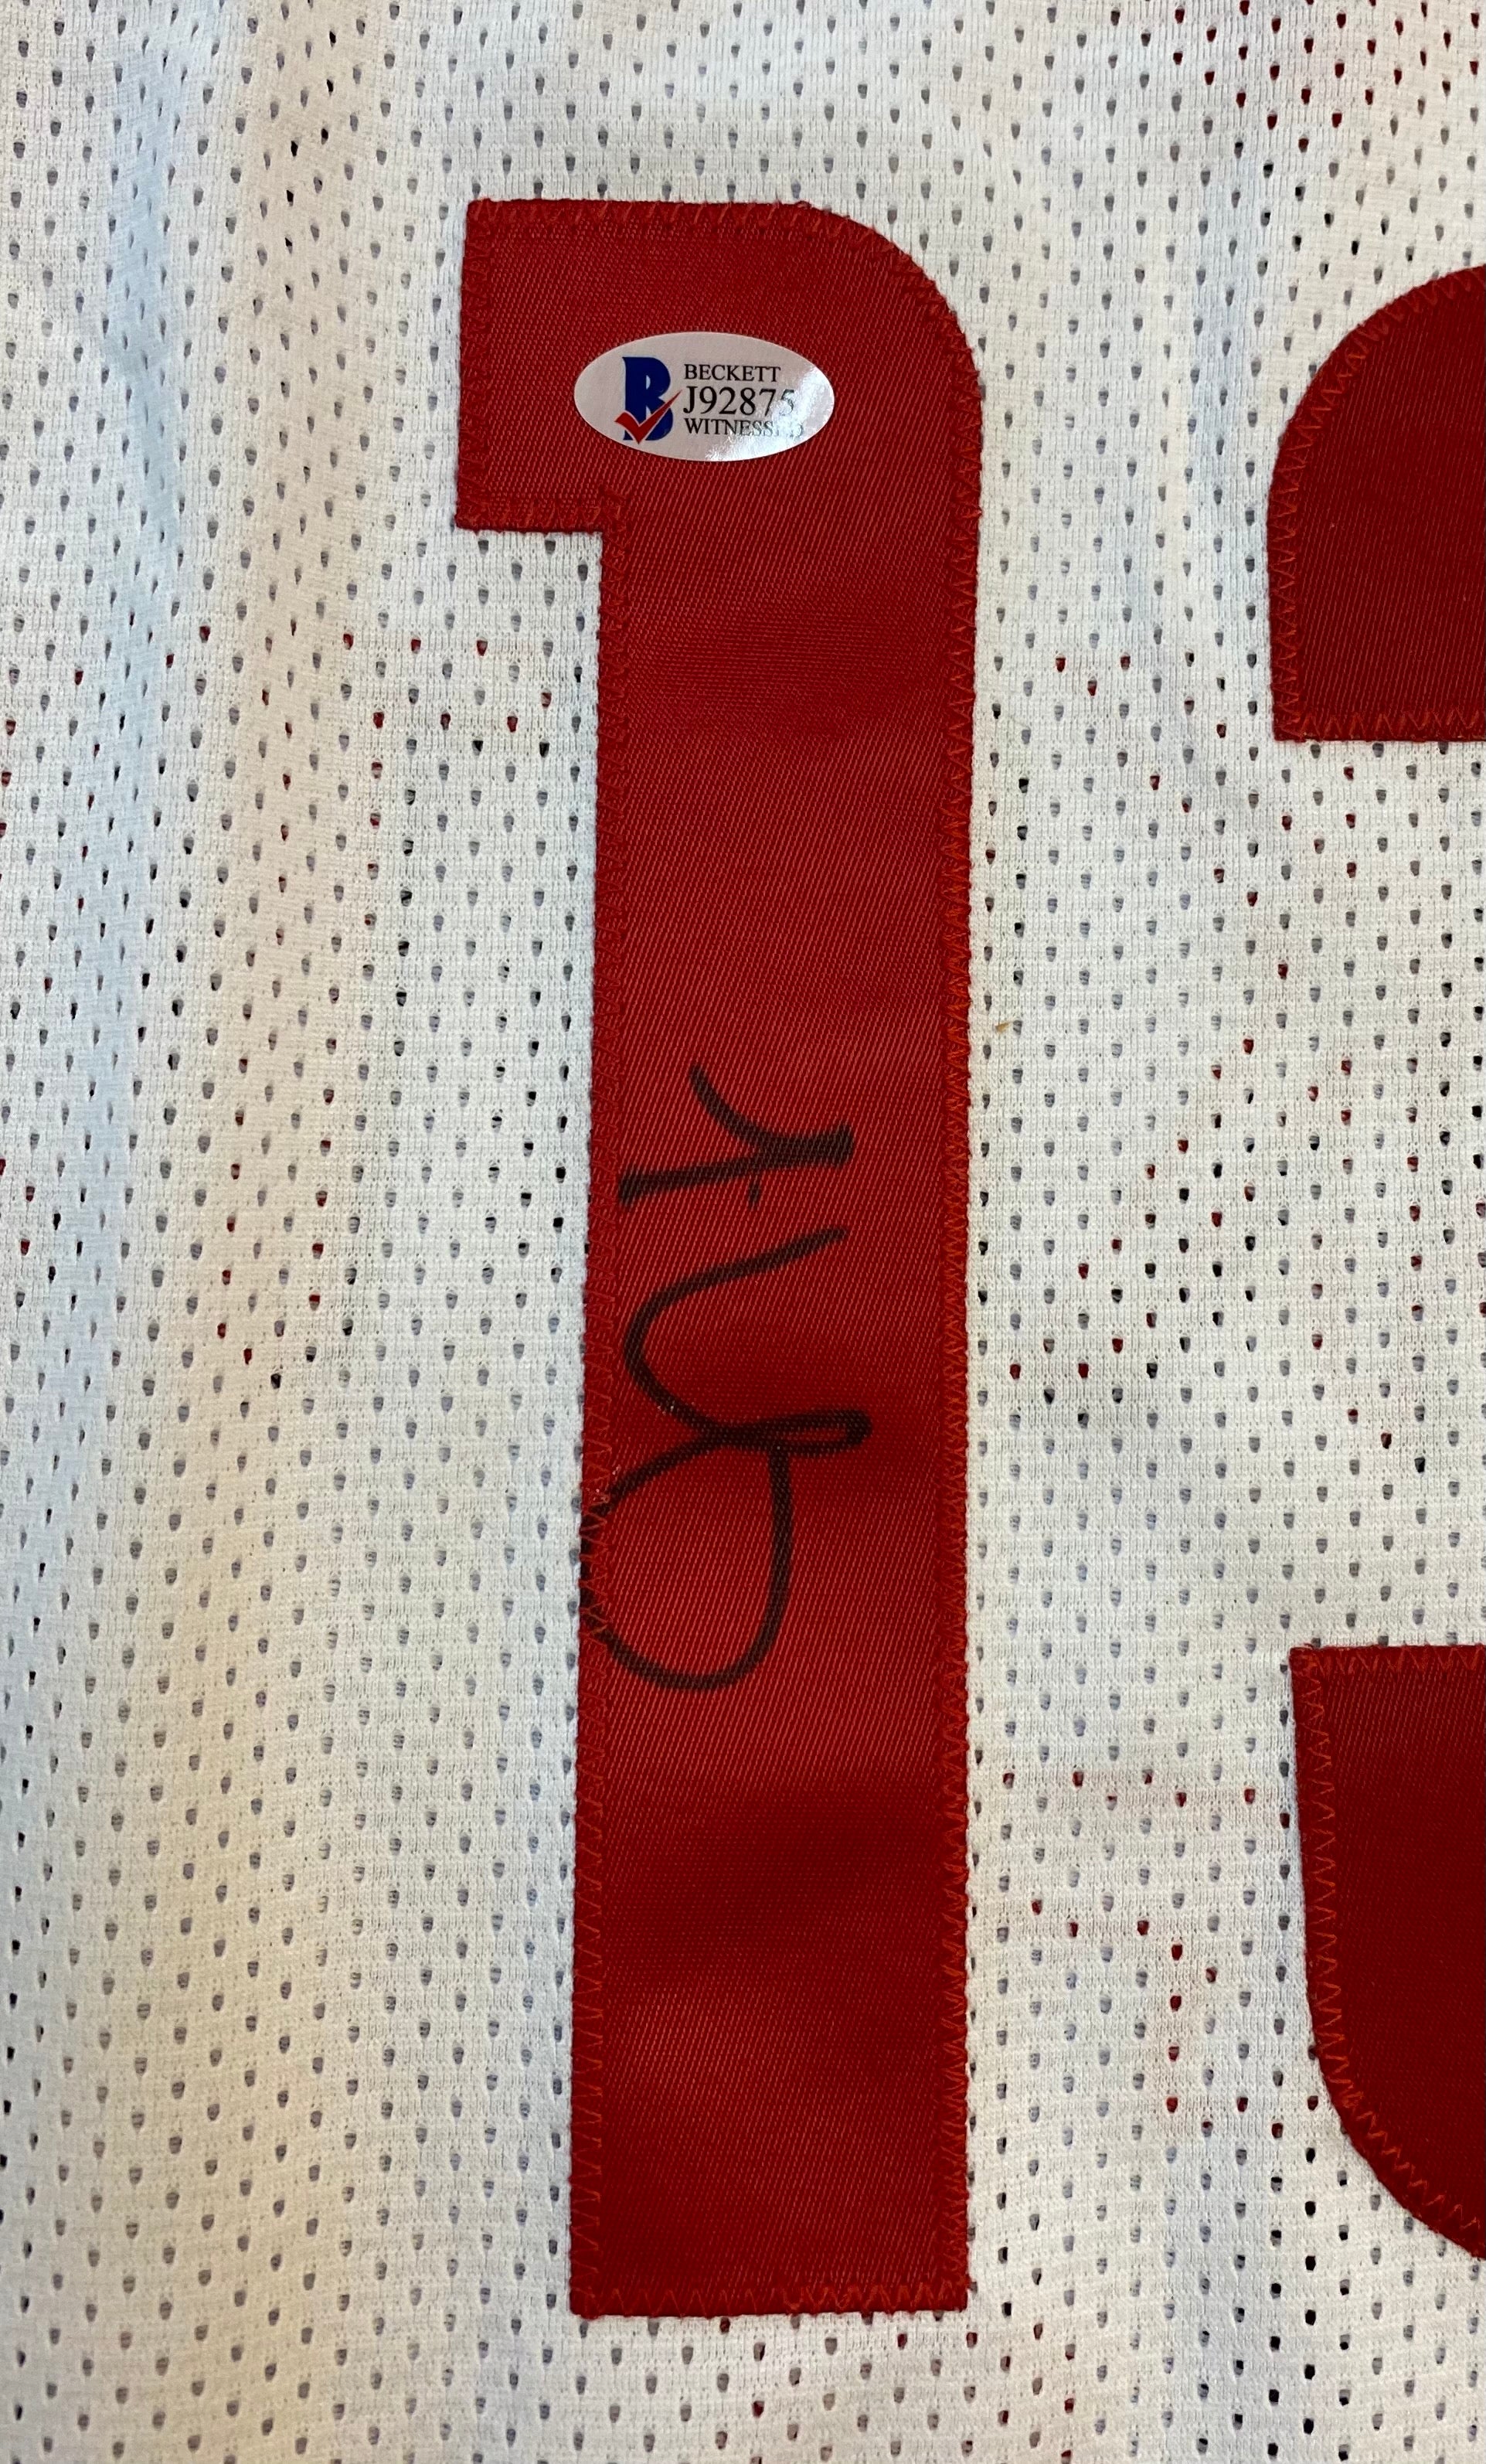 James Harden Signed Houston Rockets Jersey (Beckett COA) (Size: XL